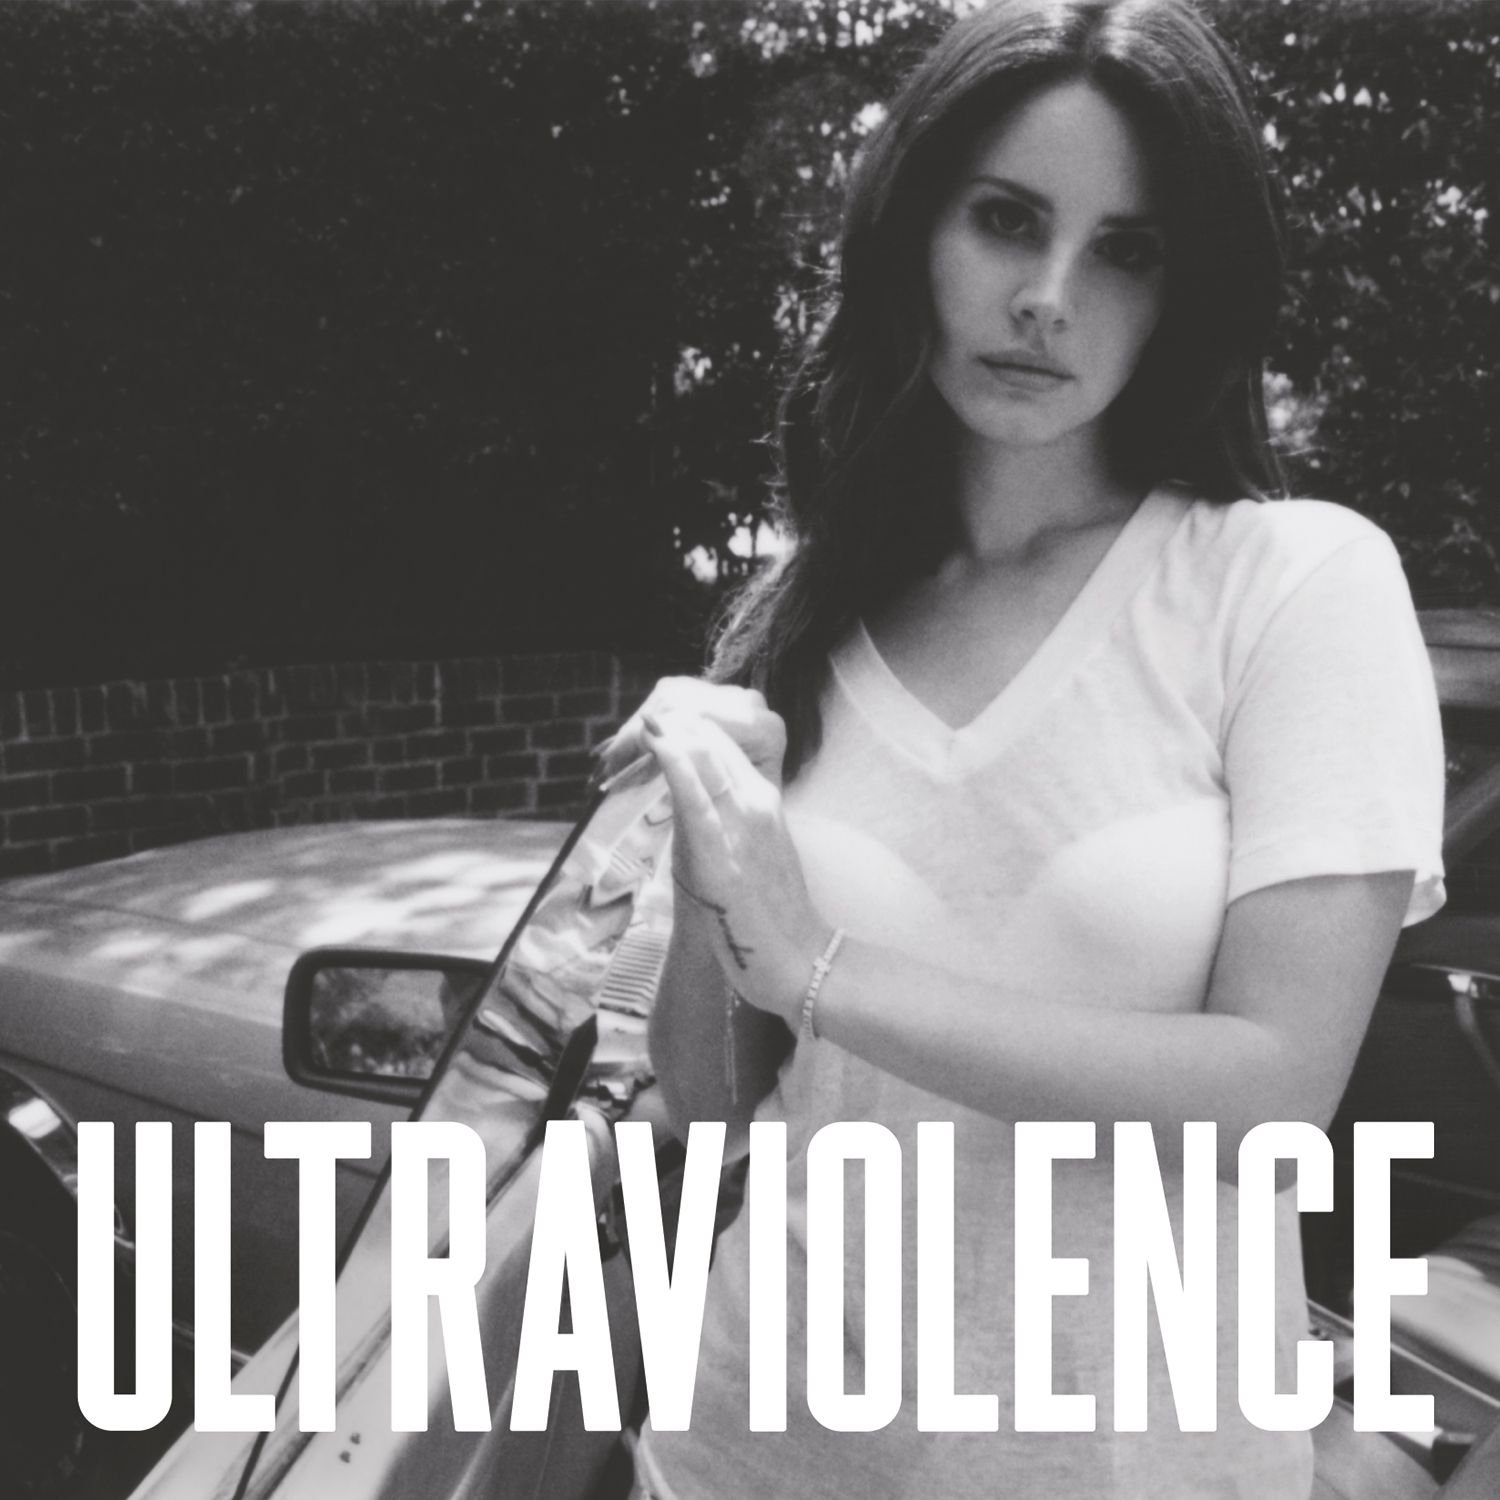 Lana Del Rey "Ultraviolence" CD